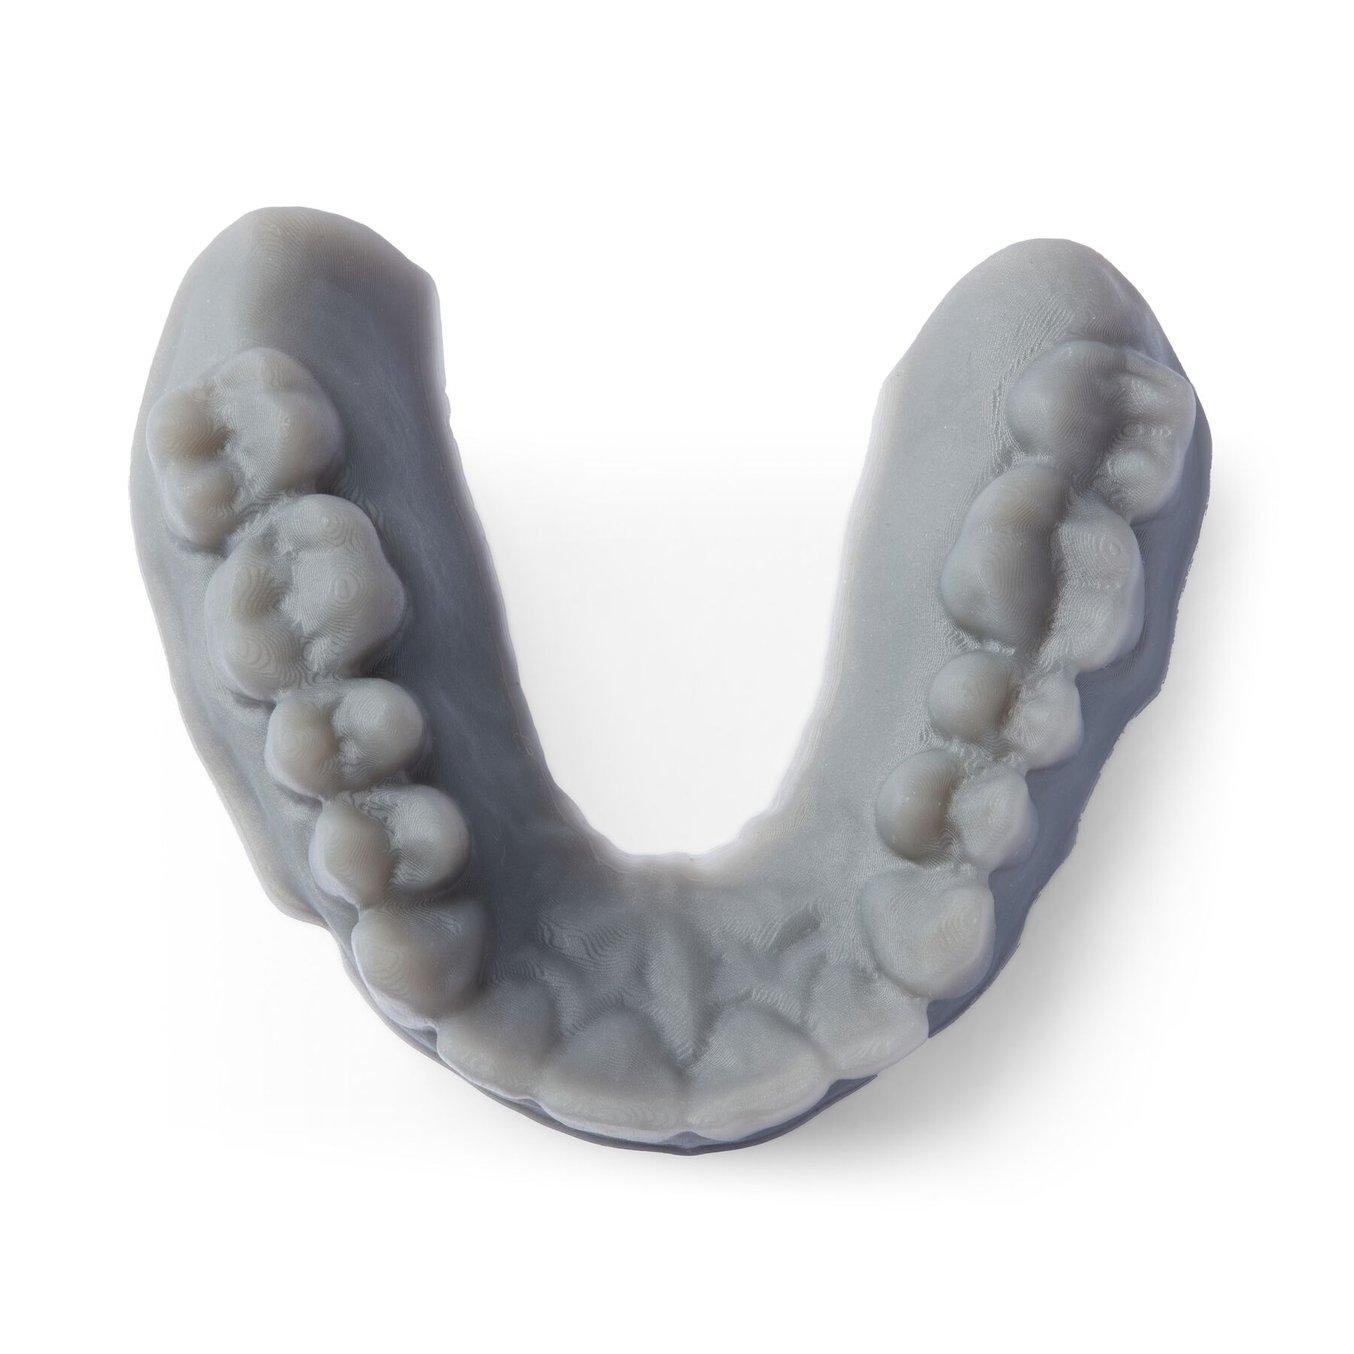 3D printed dental aligner model